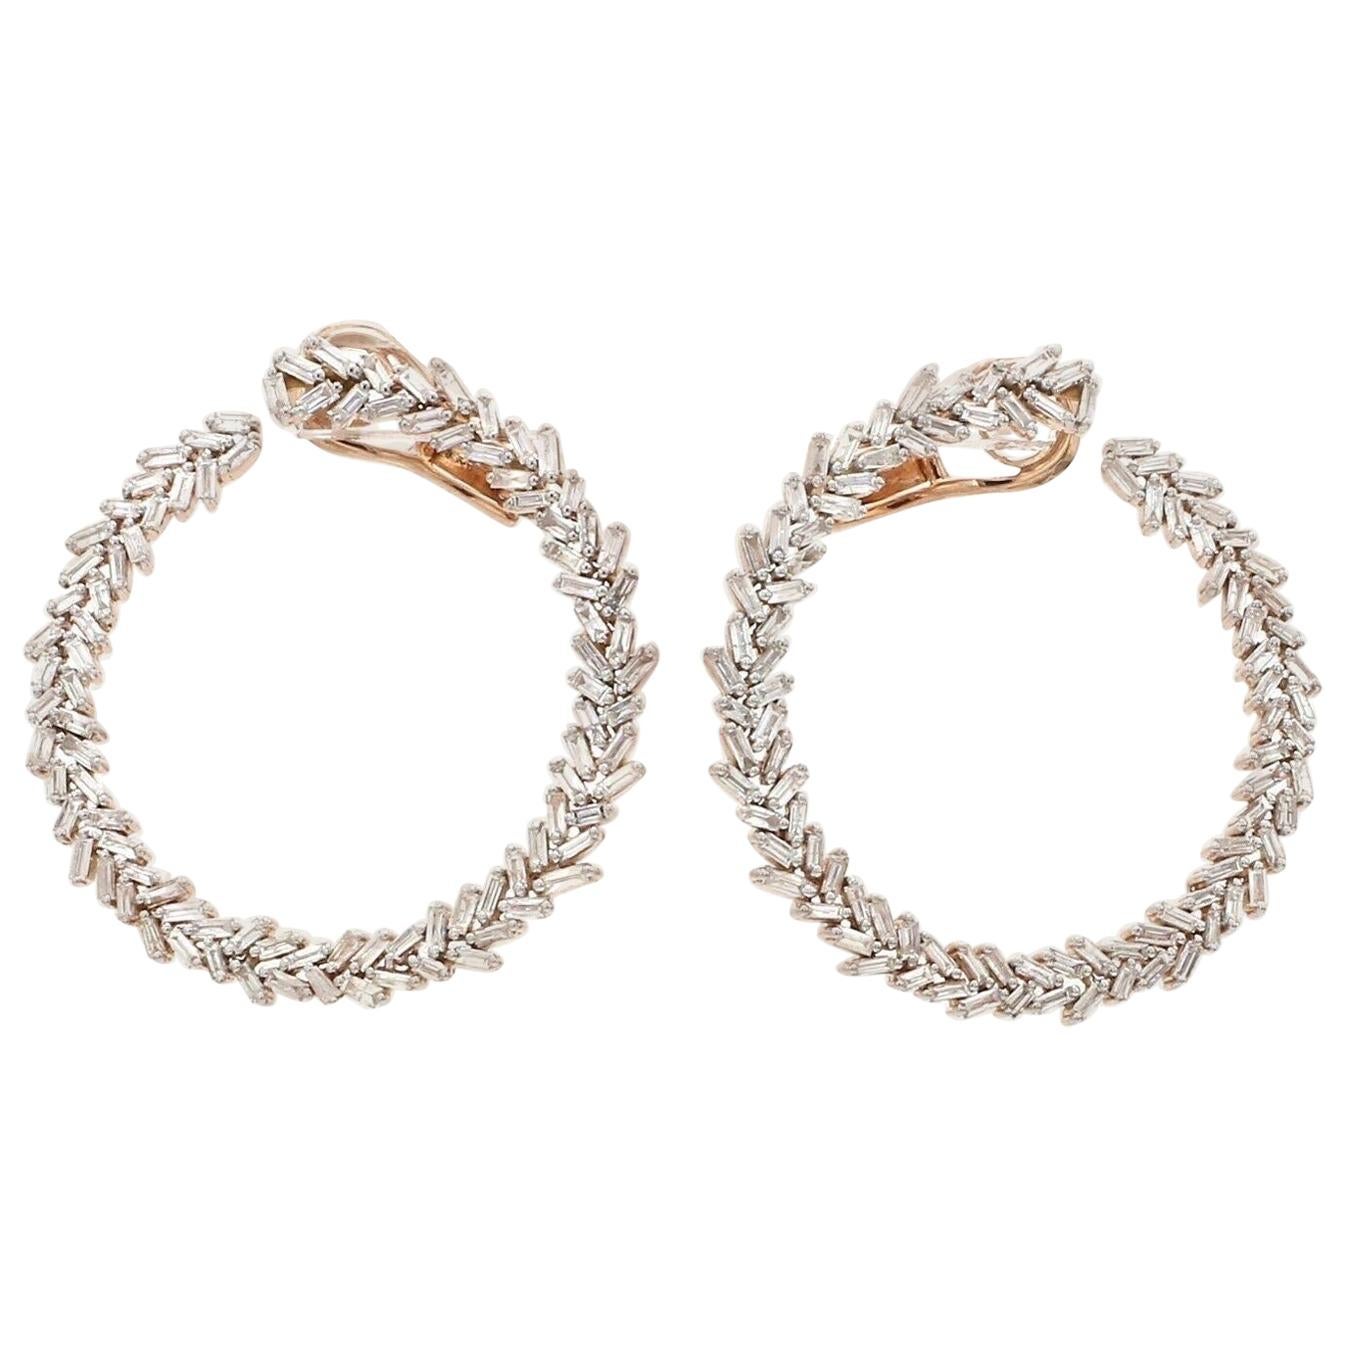 3.0 Carat Diamond 18 Karat Gold Baguette Hoop Earrings